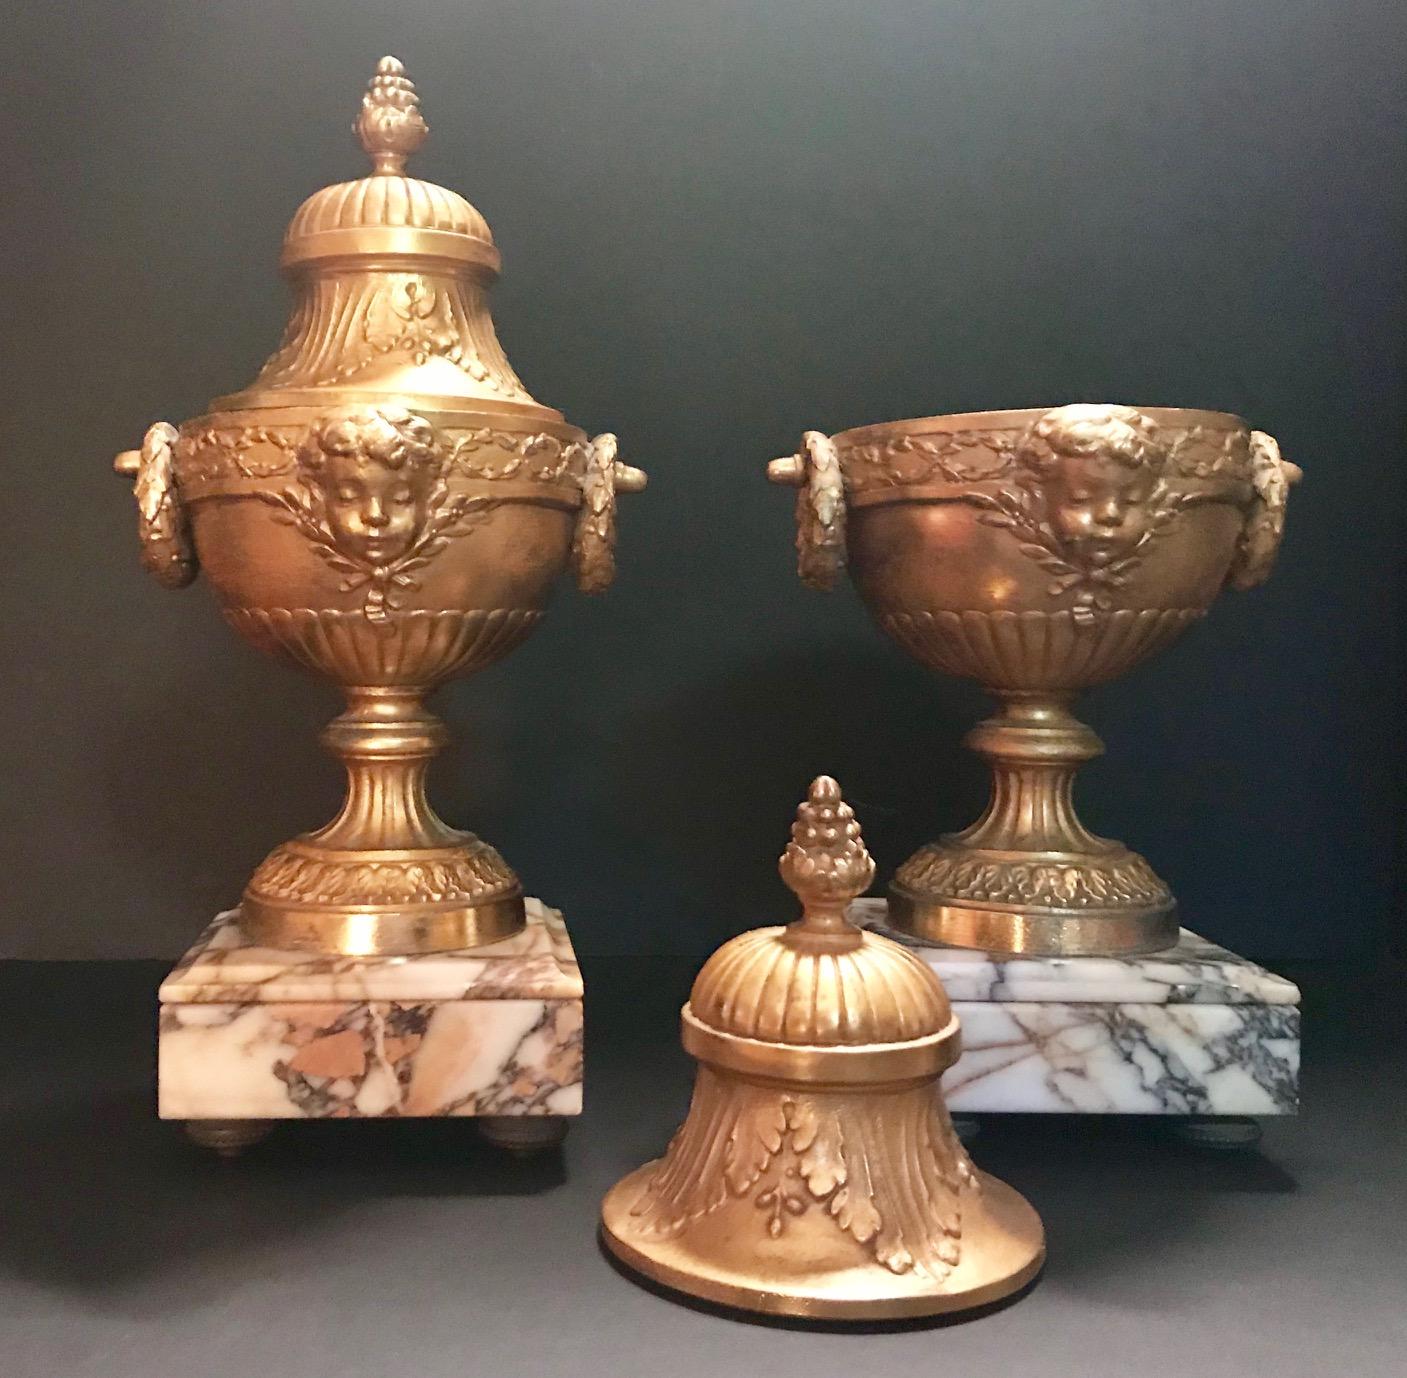 19th Century Pair of French Louis XVI Style Gilt Bronze lidded Urns  (Vergoldet)